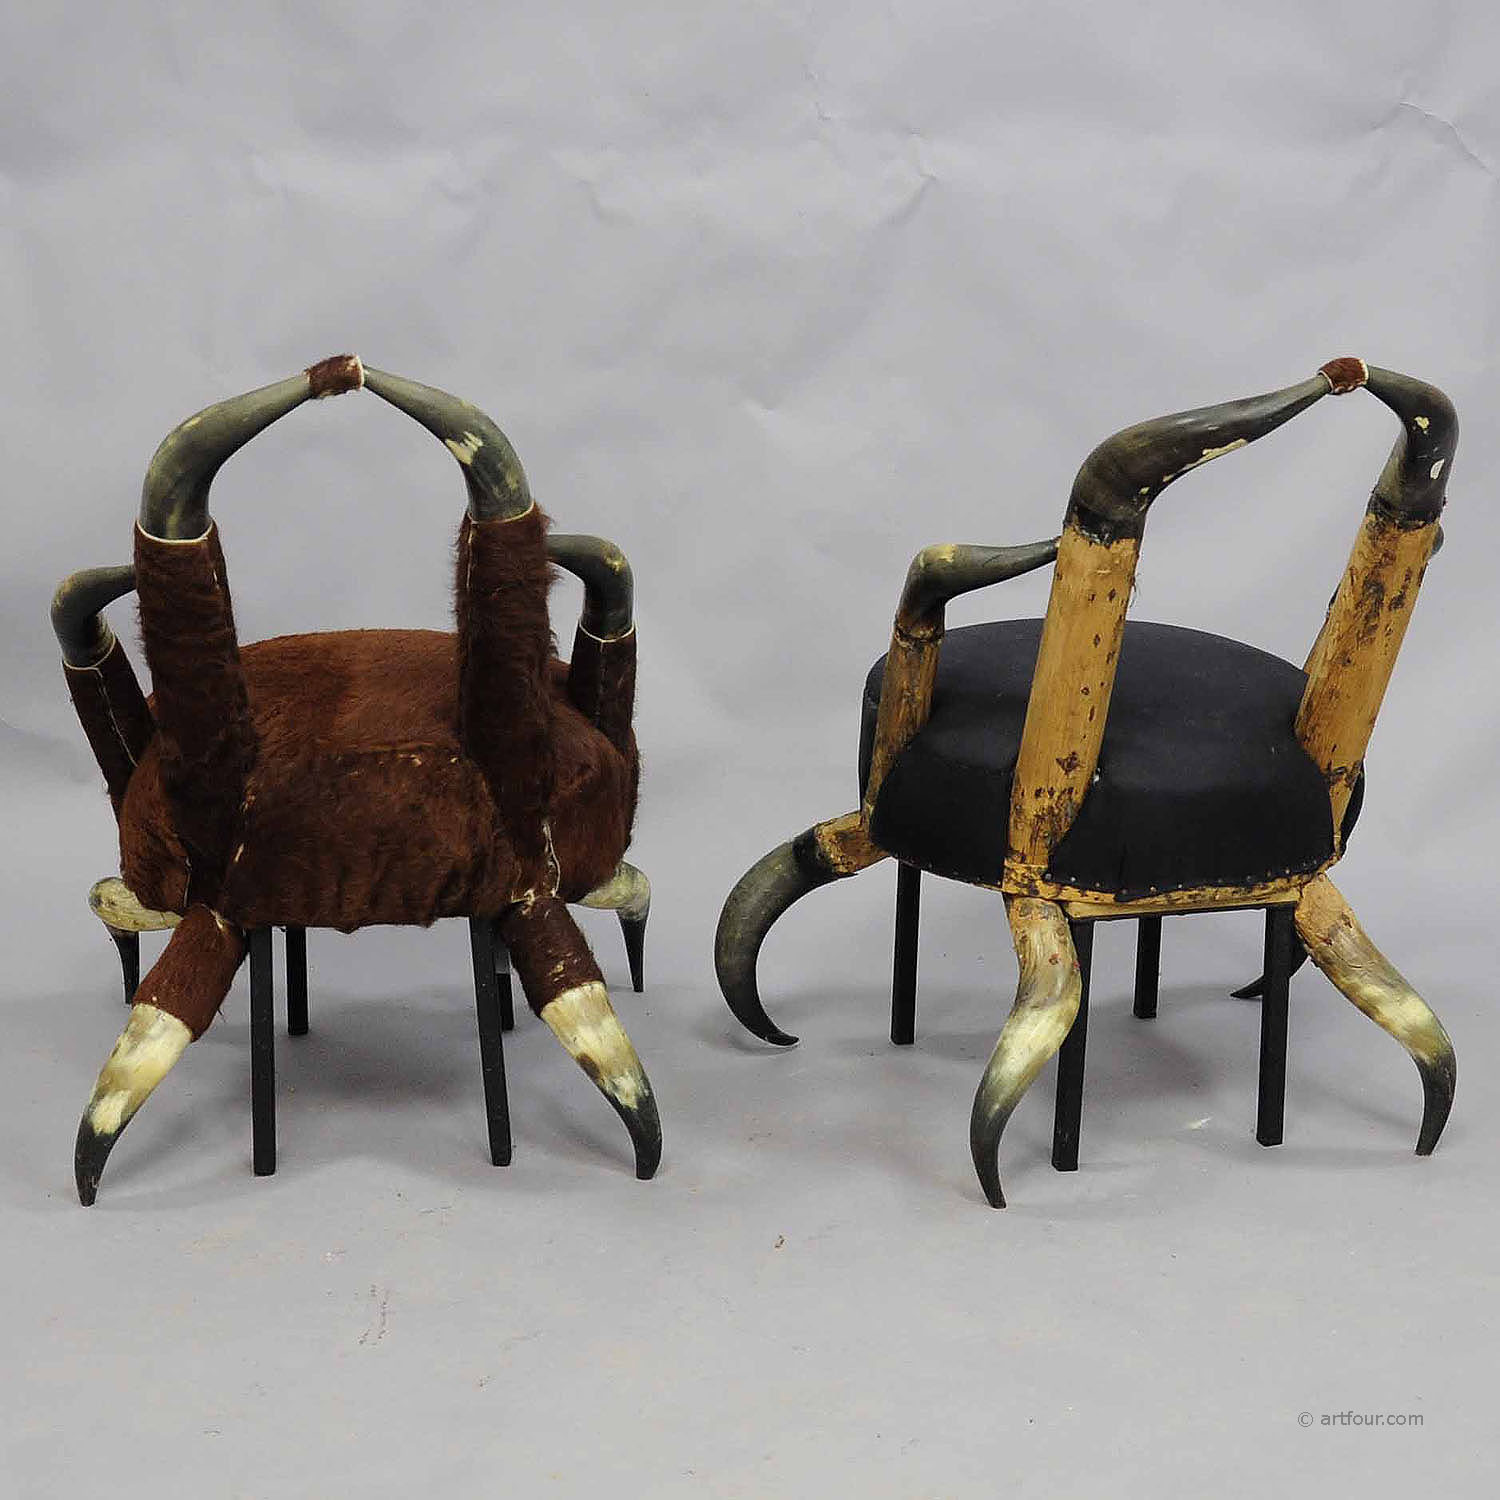 Pair of Small Antique Horn Chairs, Austria ca. 1870